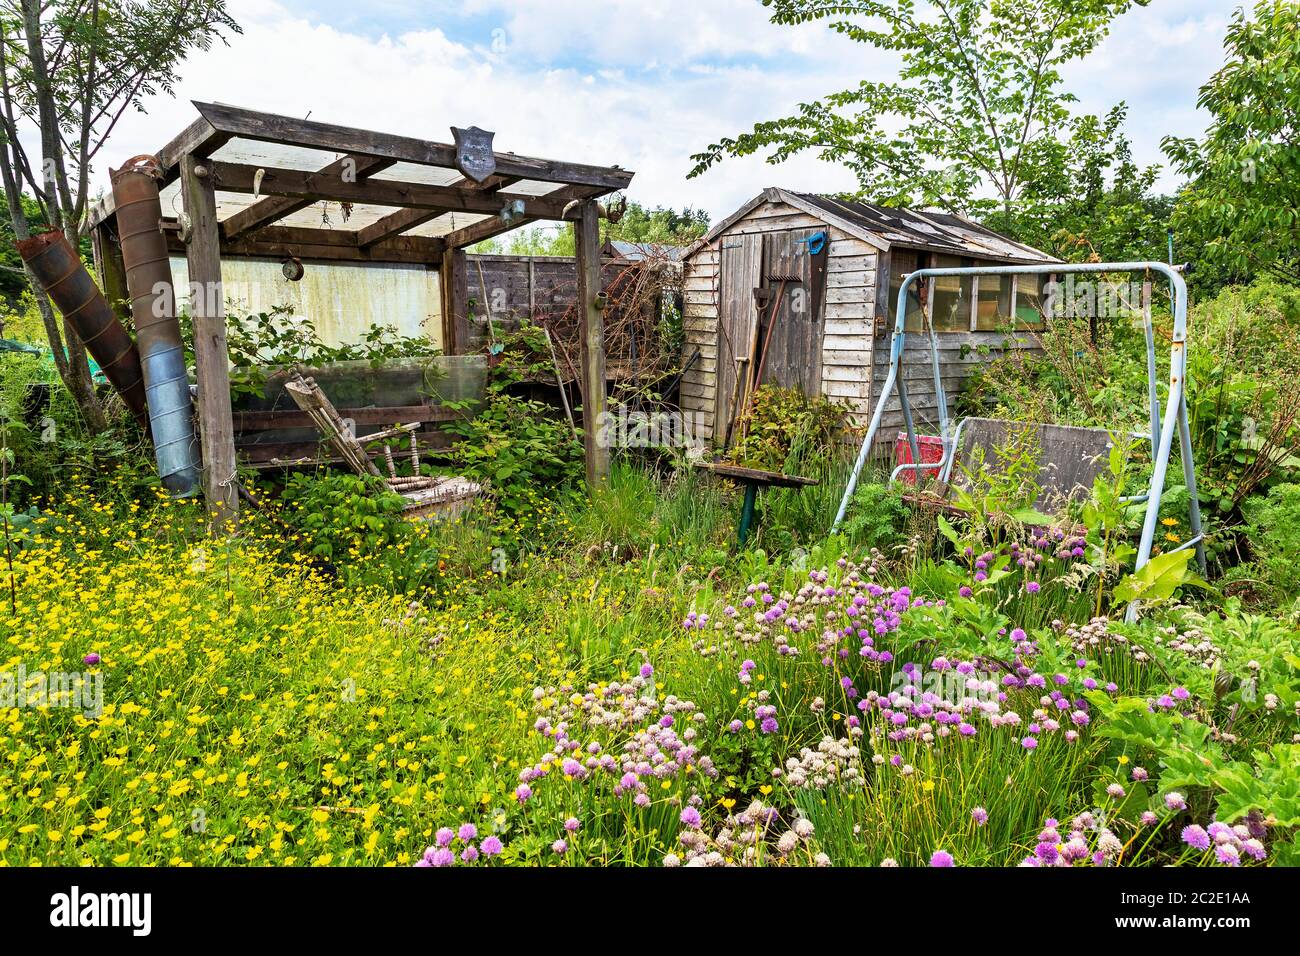 Overgrown plot with wild flowers, wooden hut and abandoned garden seat, Eglinton Growers Allotments, Kilwinning, Ayrshire, Scotland, UK Stock Photo